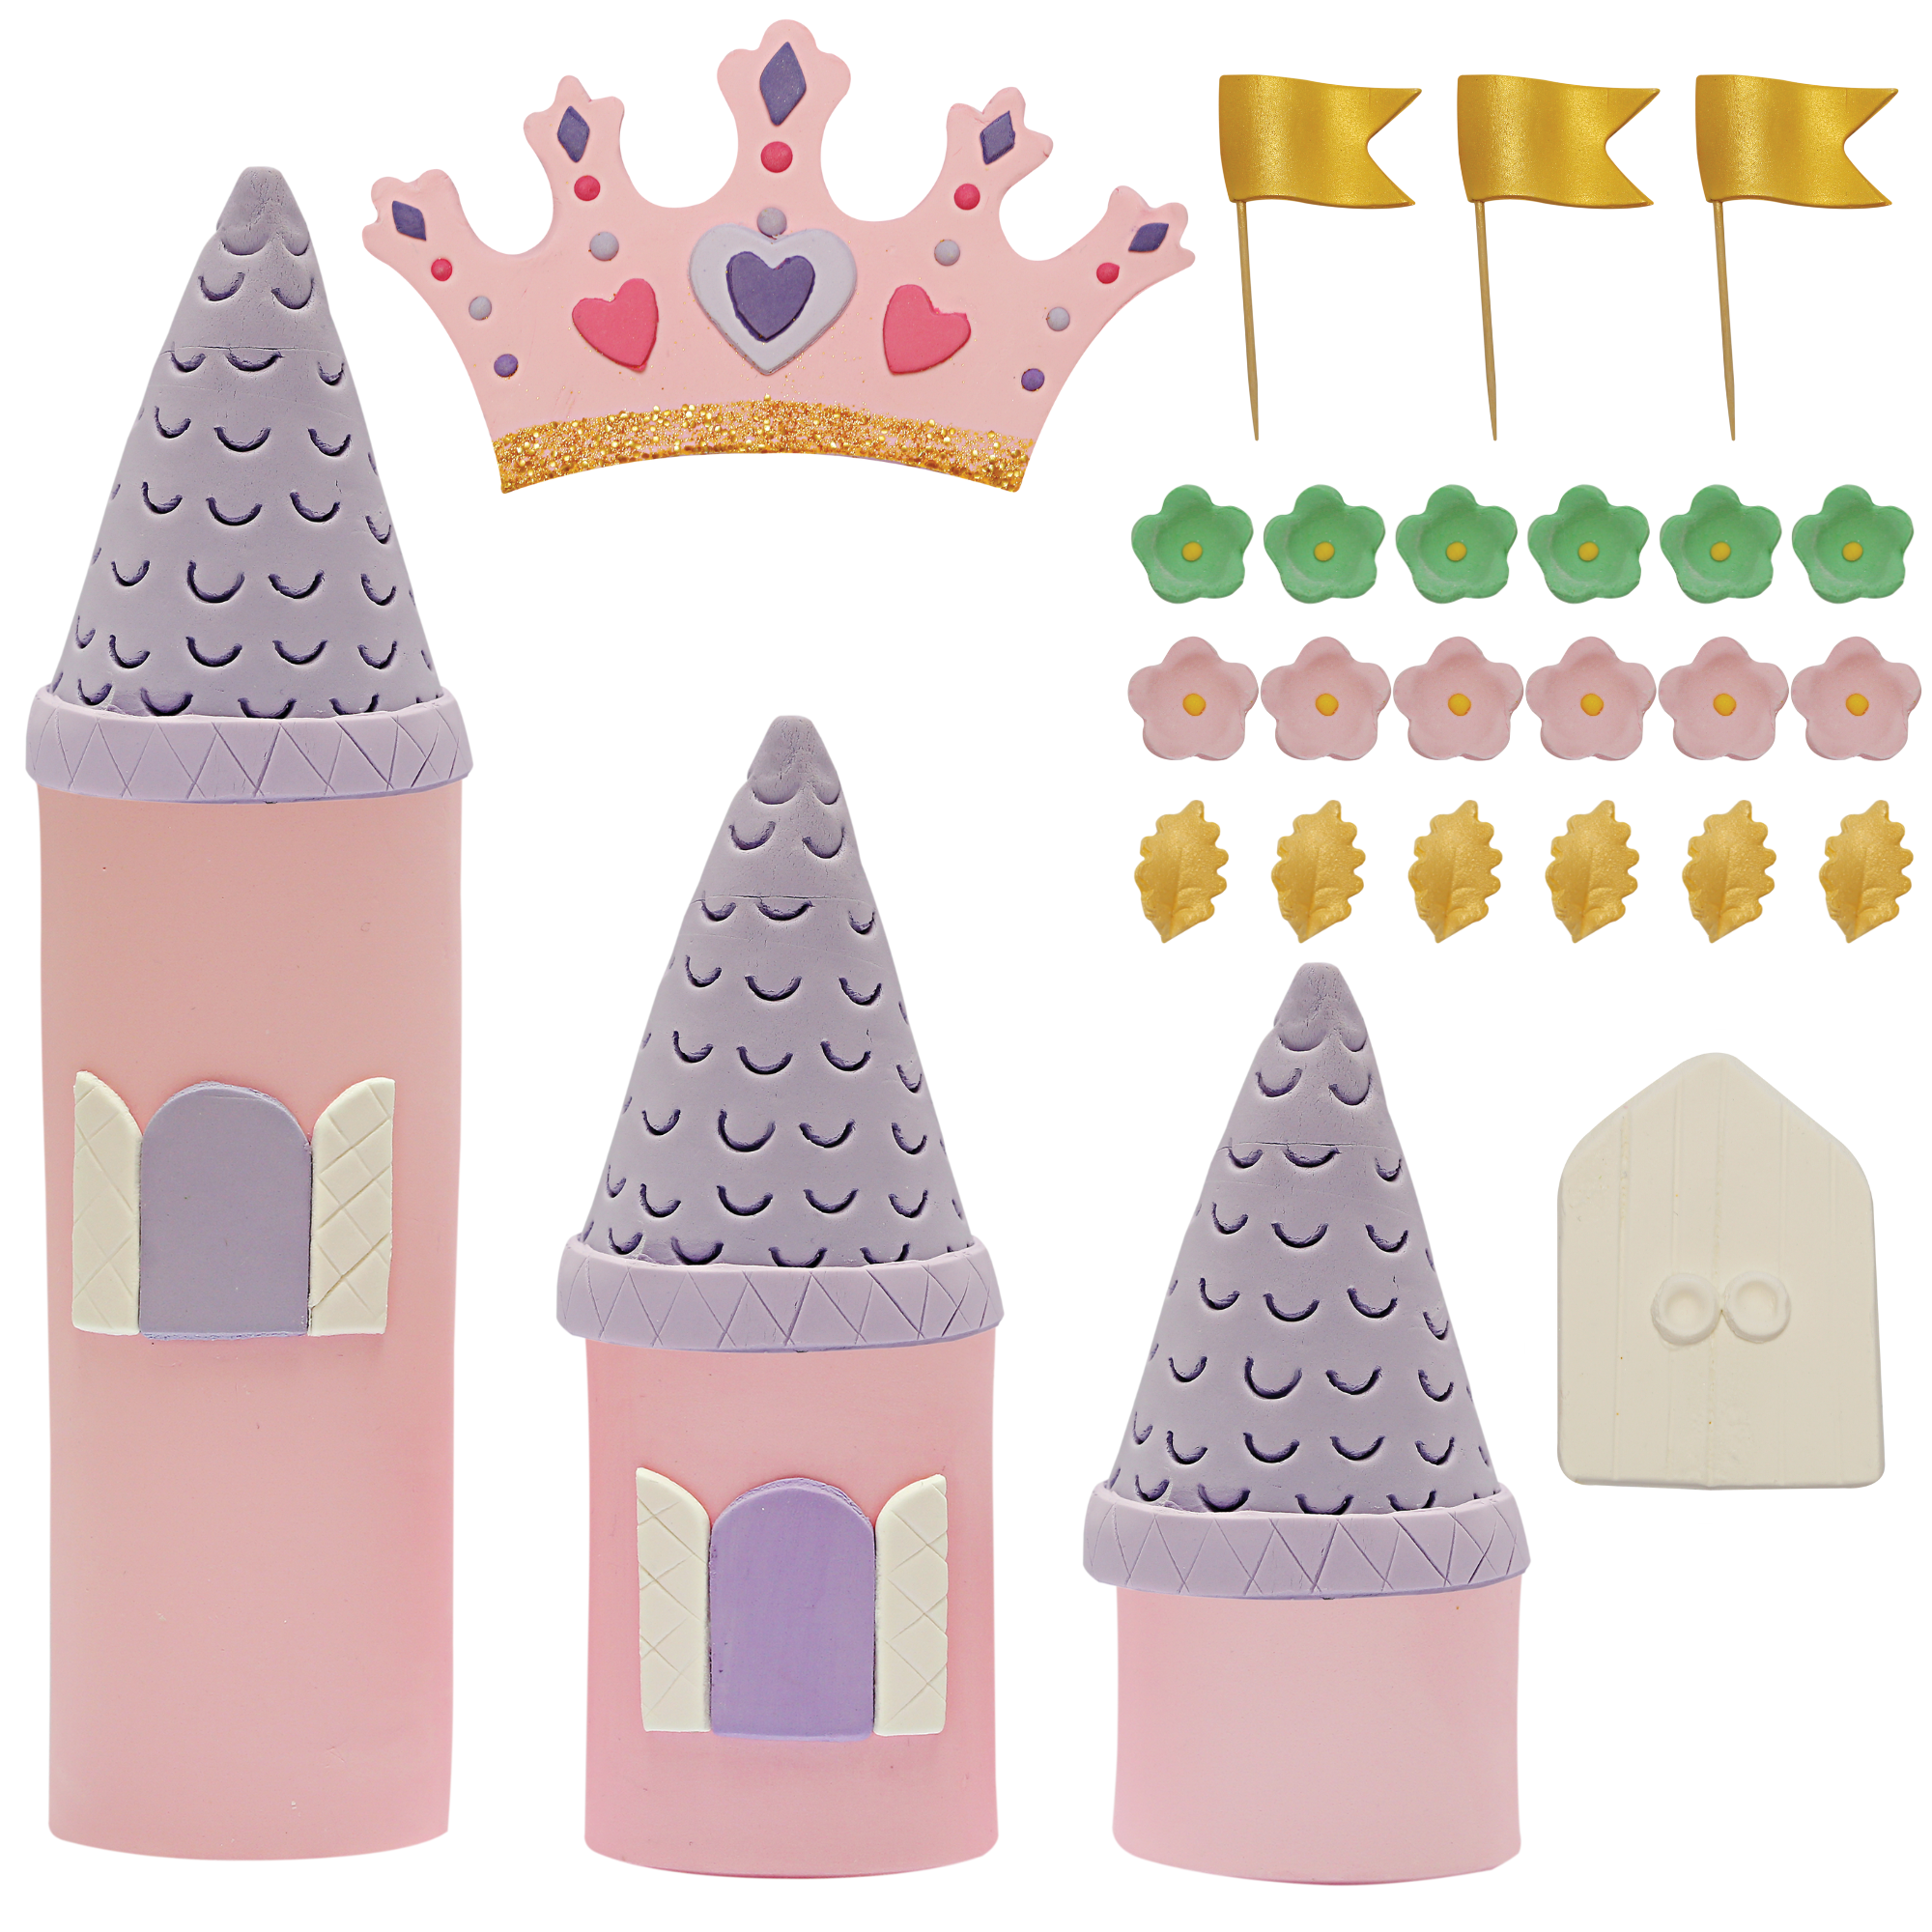 Princess Castle Designer Cake Decor